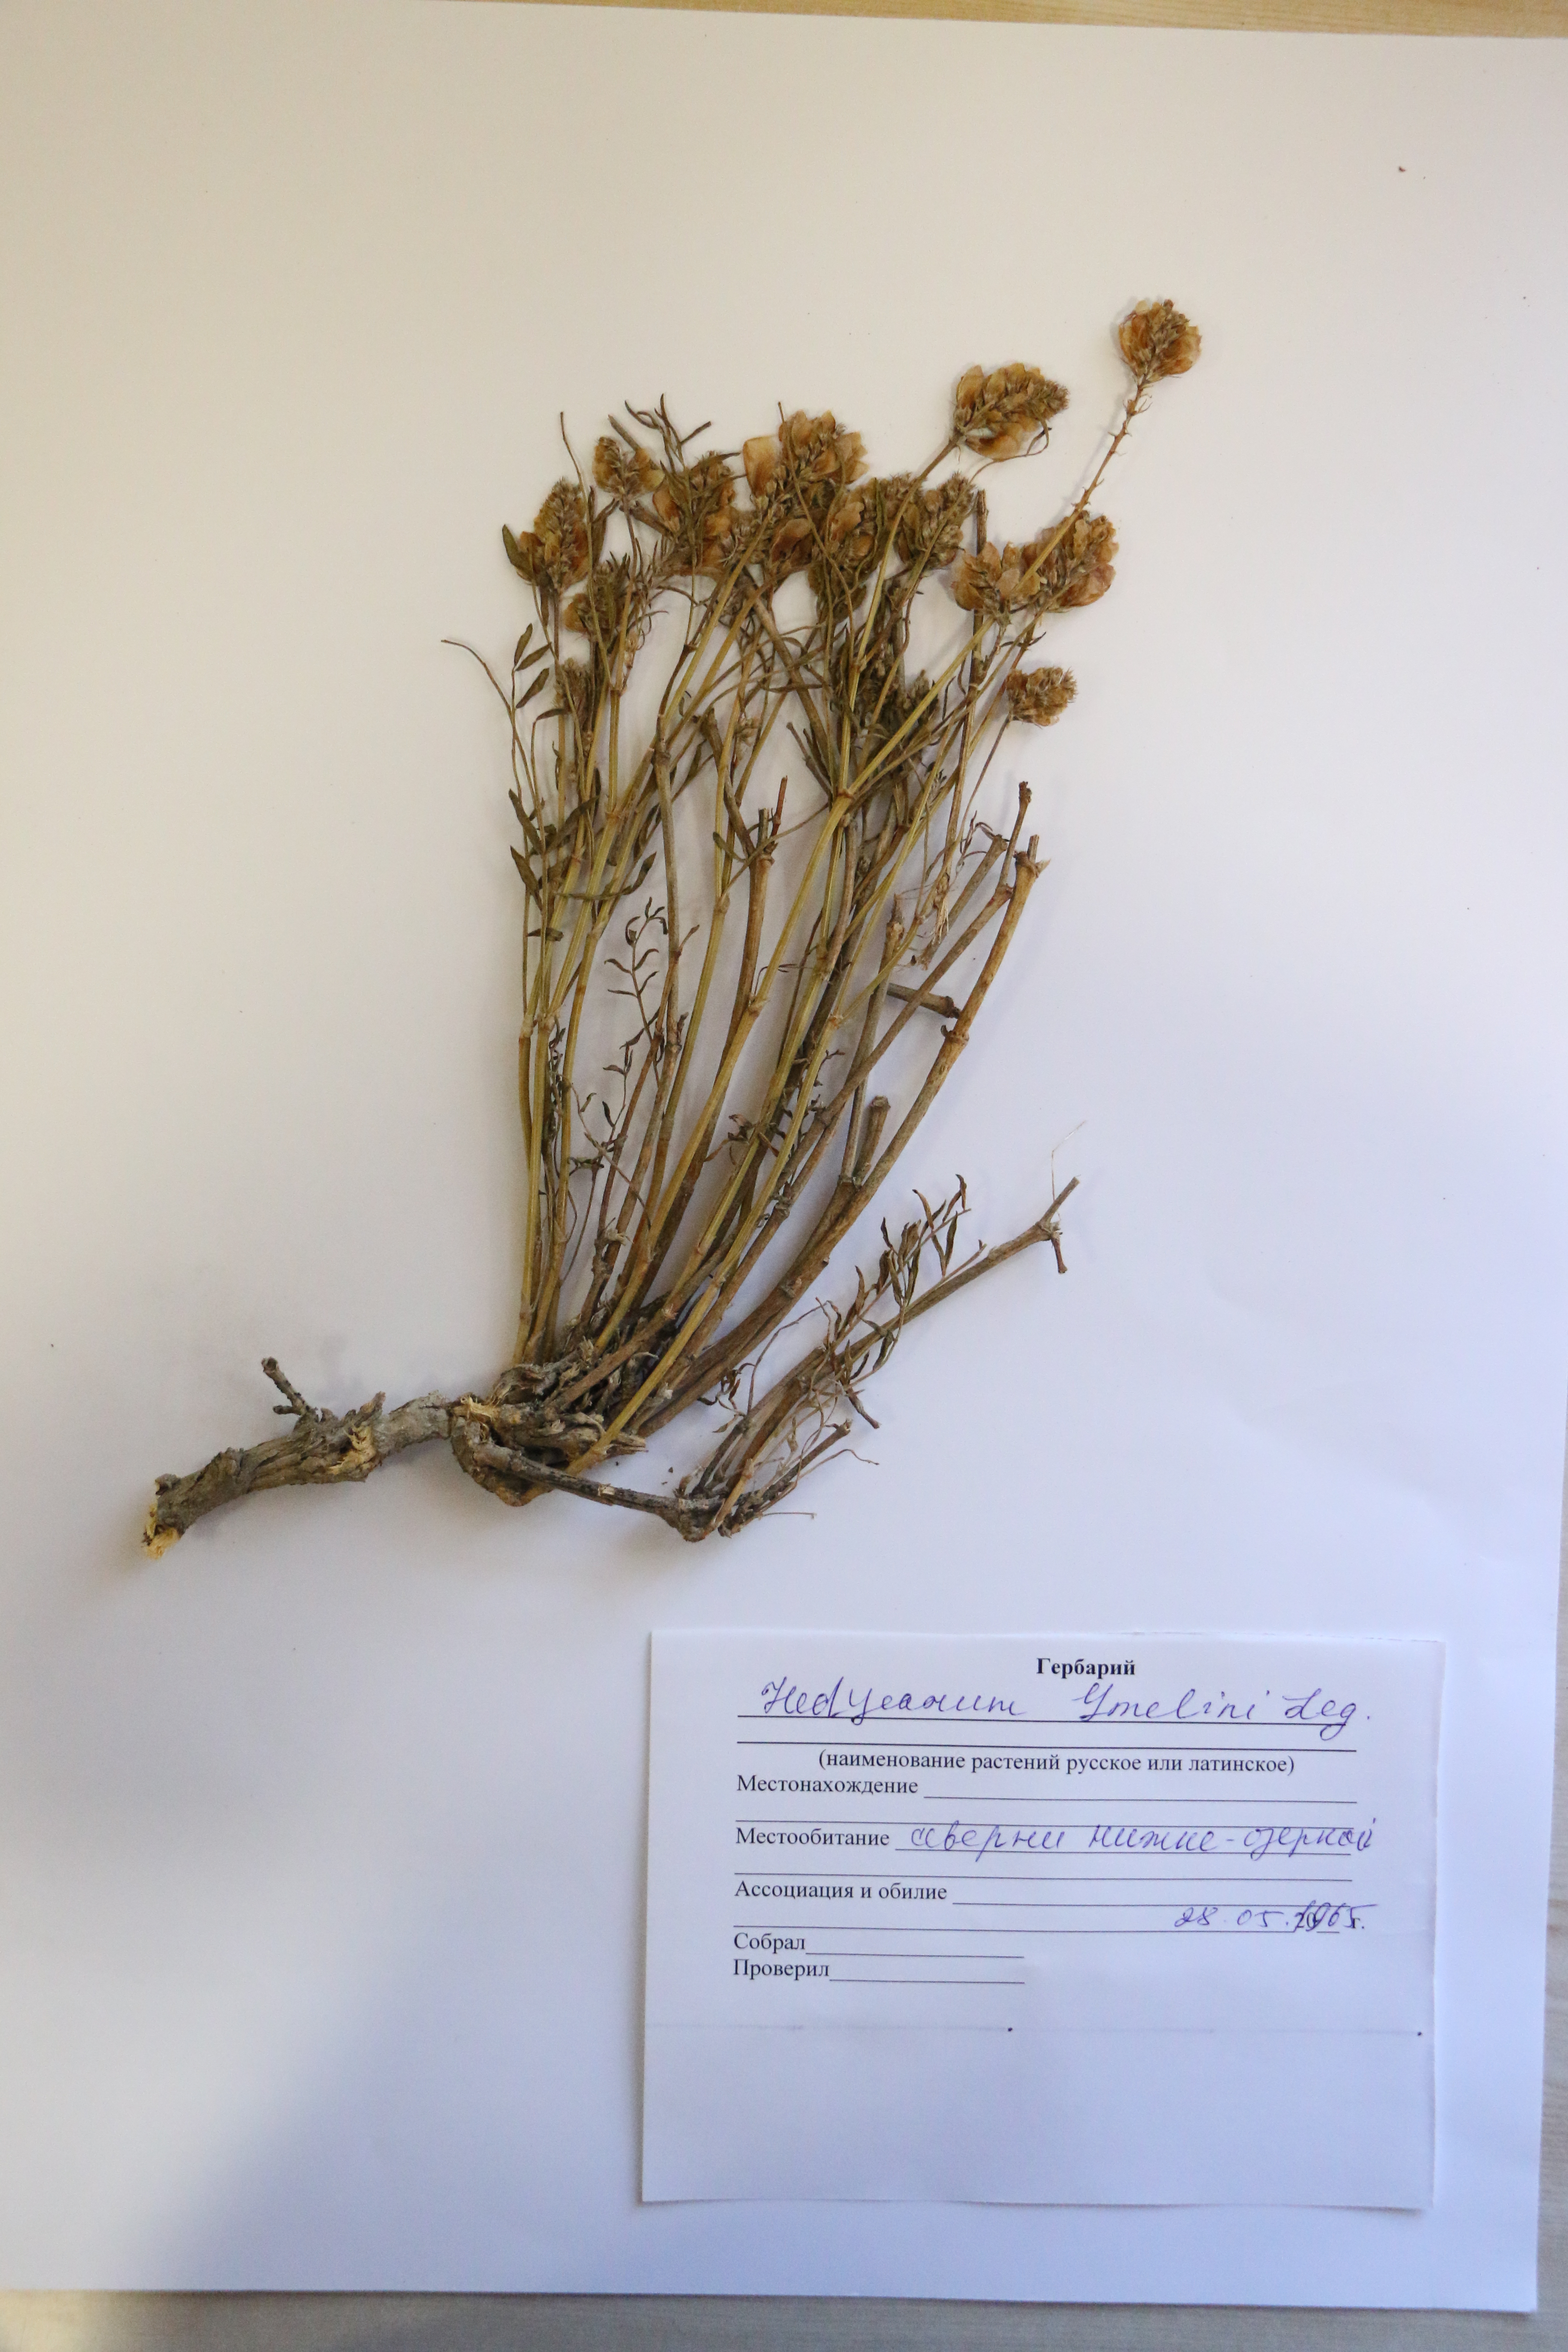 Hedysarum Gmelini Ldb. – Копеечник Гмелина